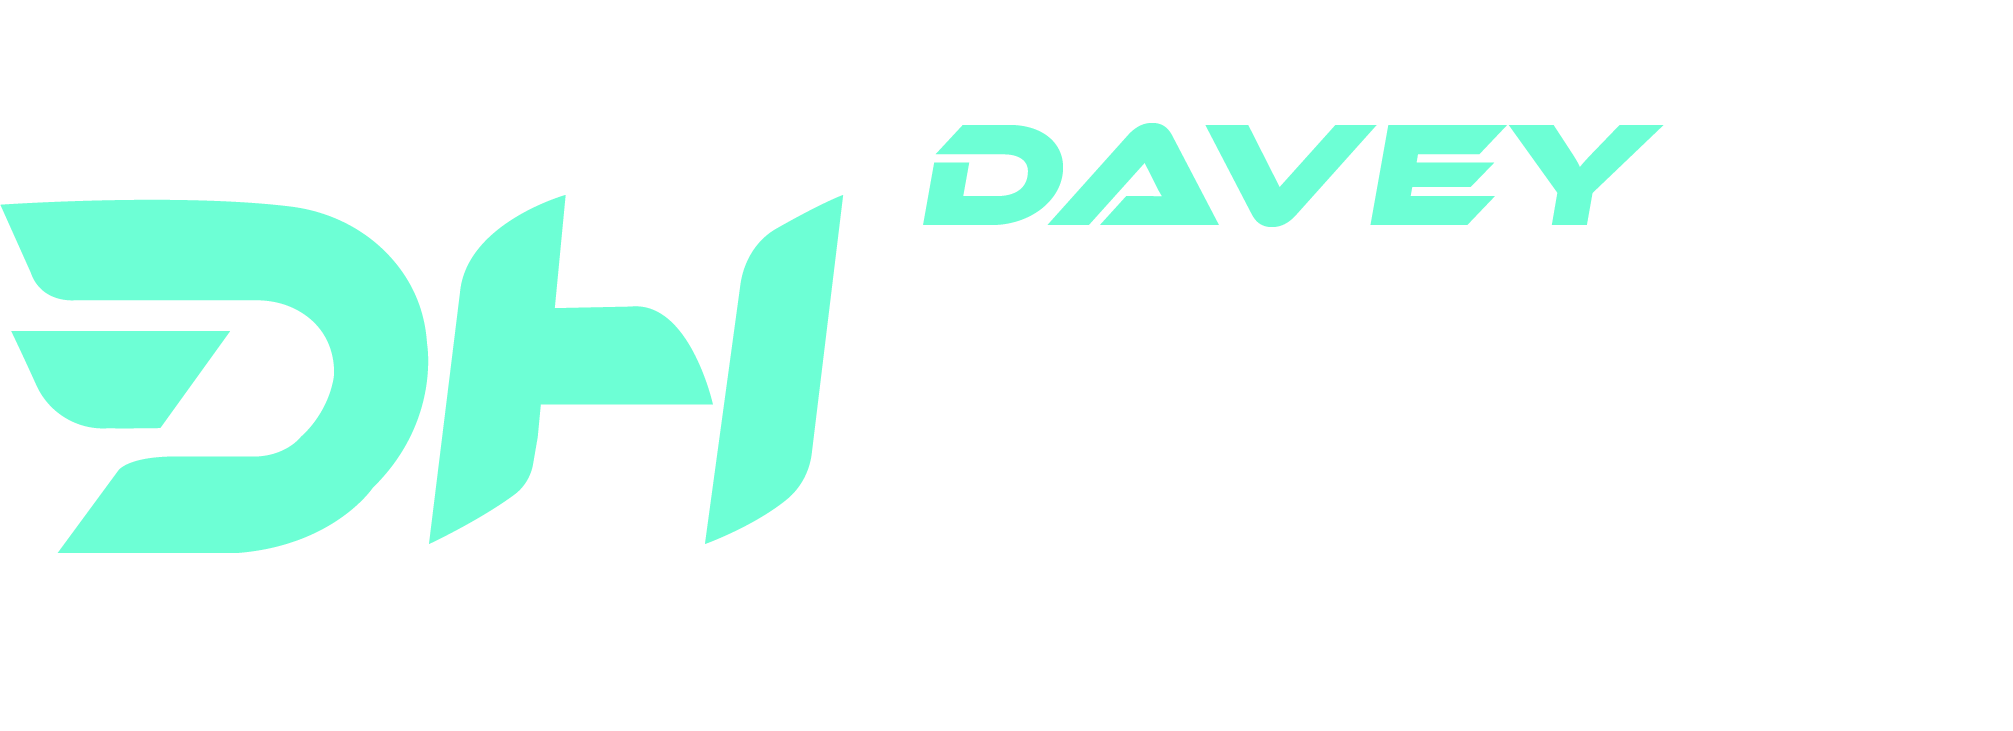 Davey Hamilton Jr.